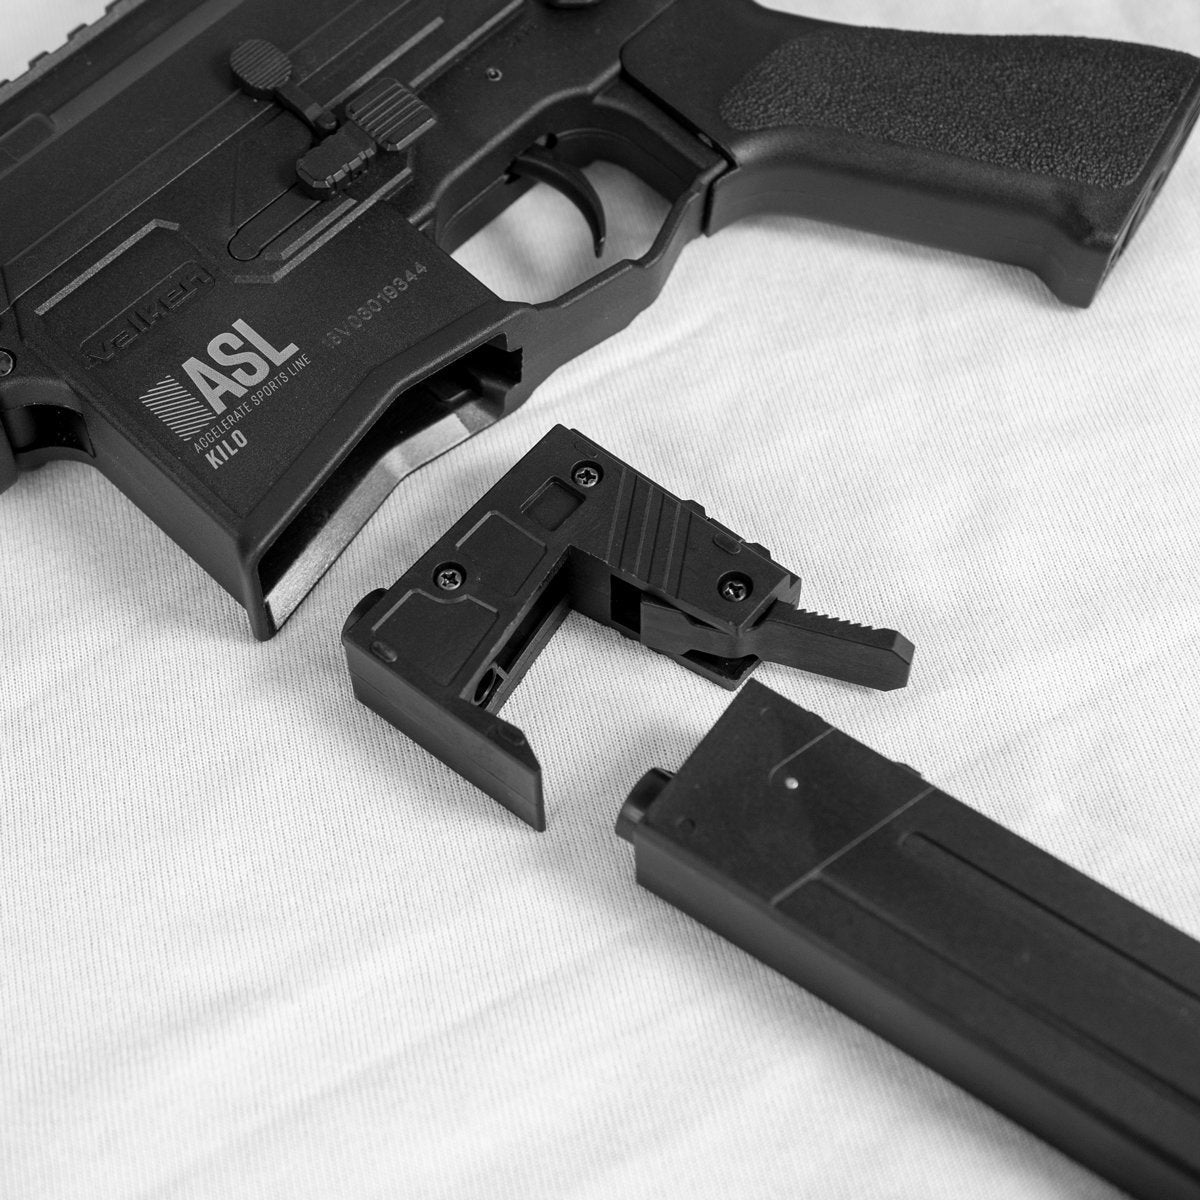 Valken AEG ASL Series Electric Airsoft Gun Package - Mod-M Rifle -  Black/Gray